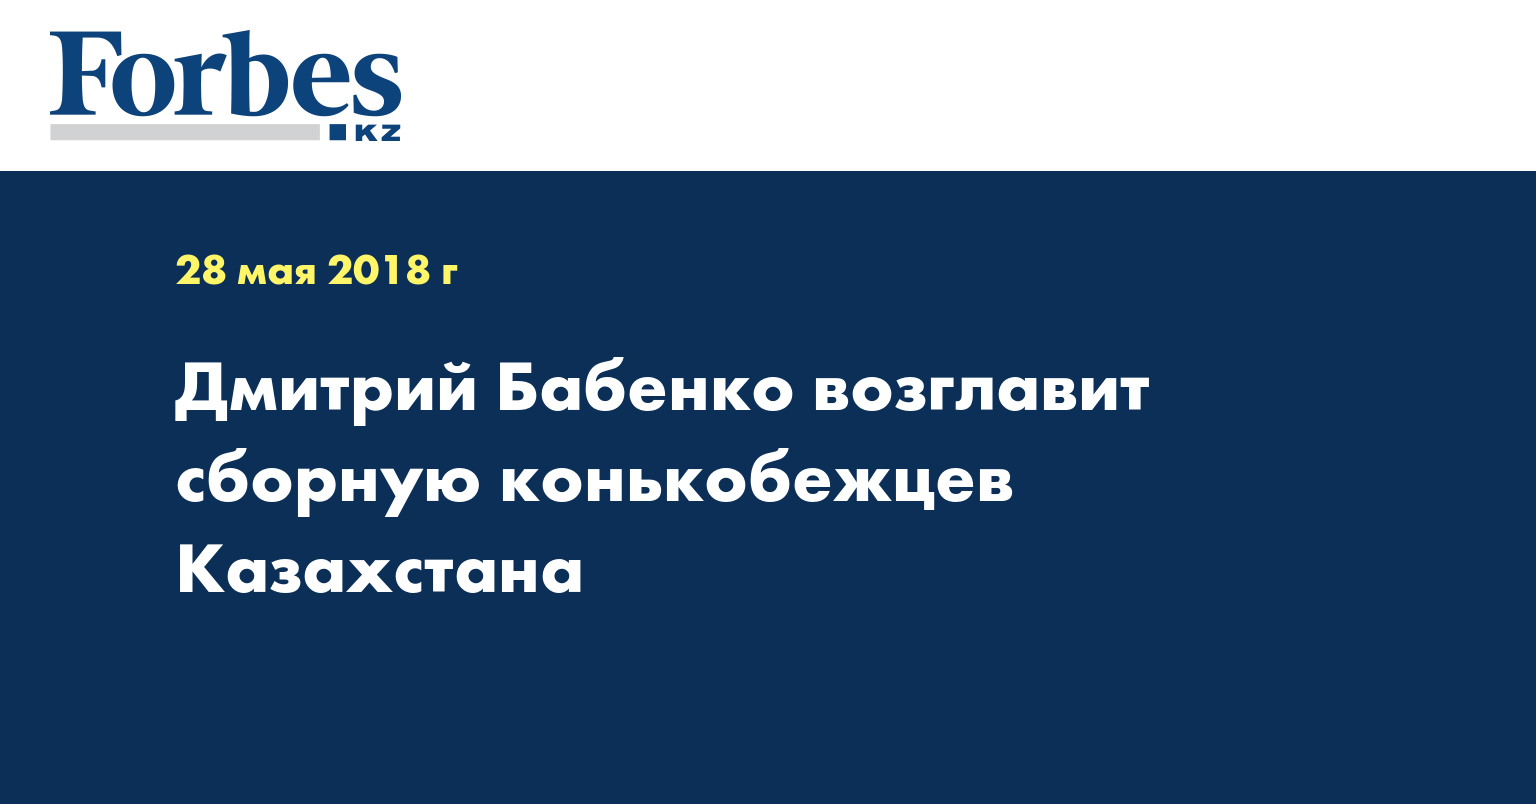 Дмитрий Бабенко возглавит сборную конькобежцев Казахстана